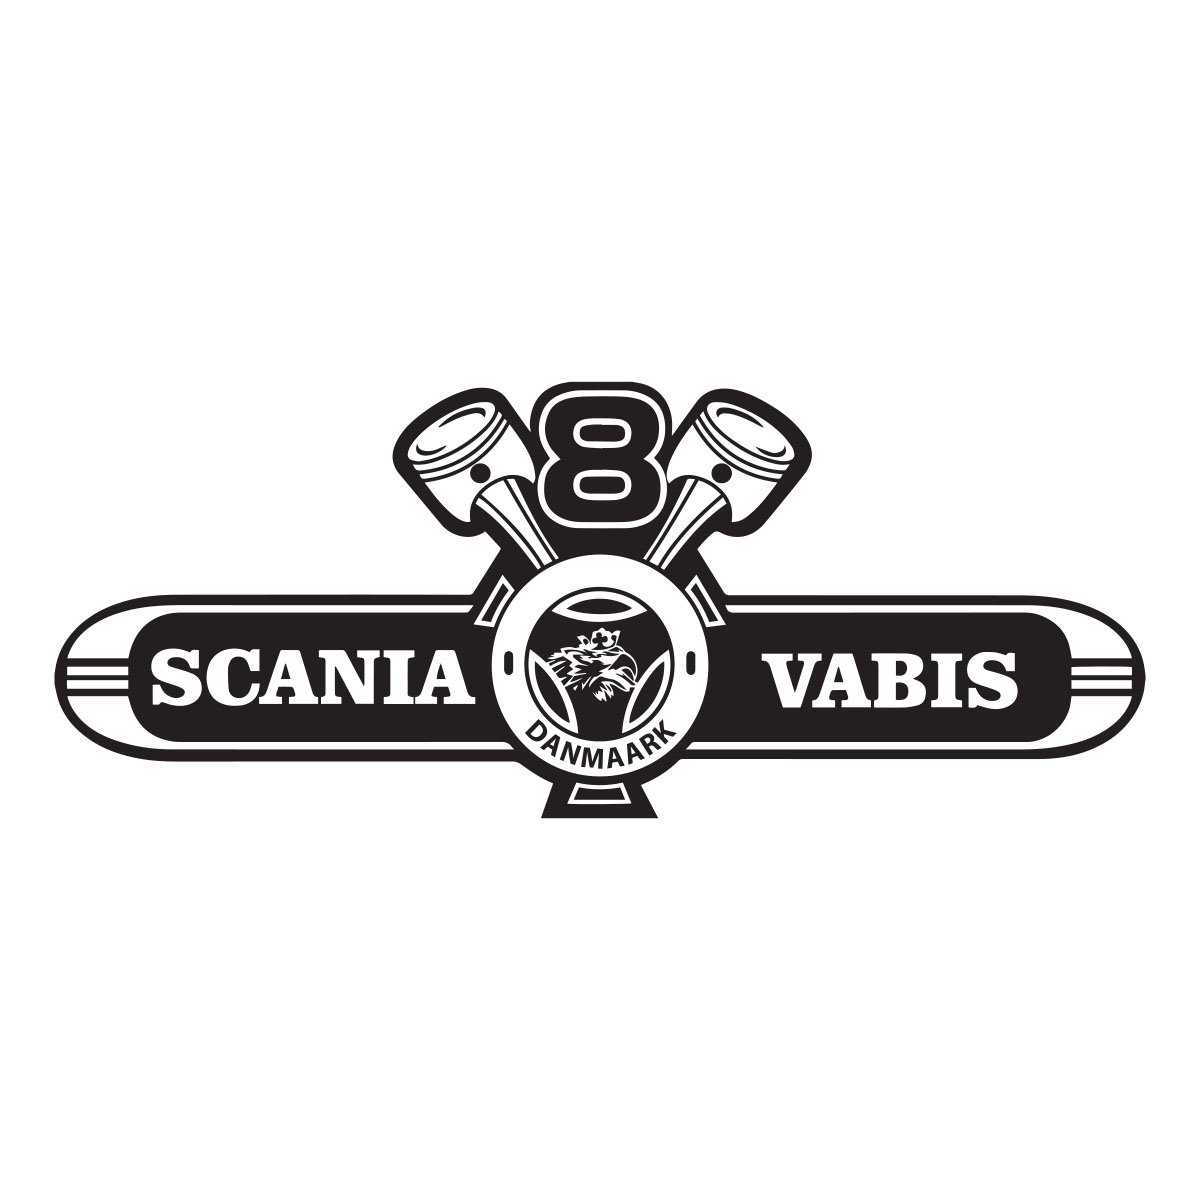 scania vabis logo2